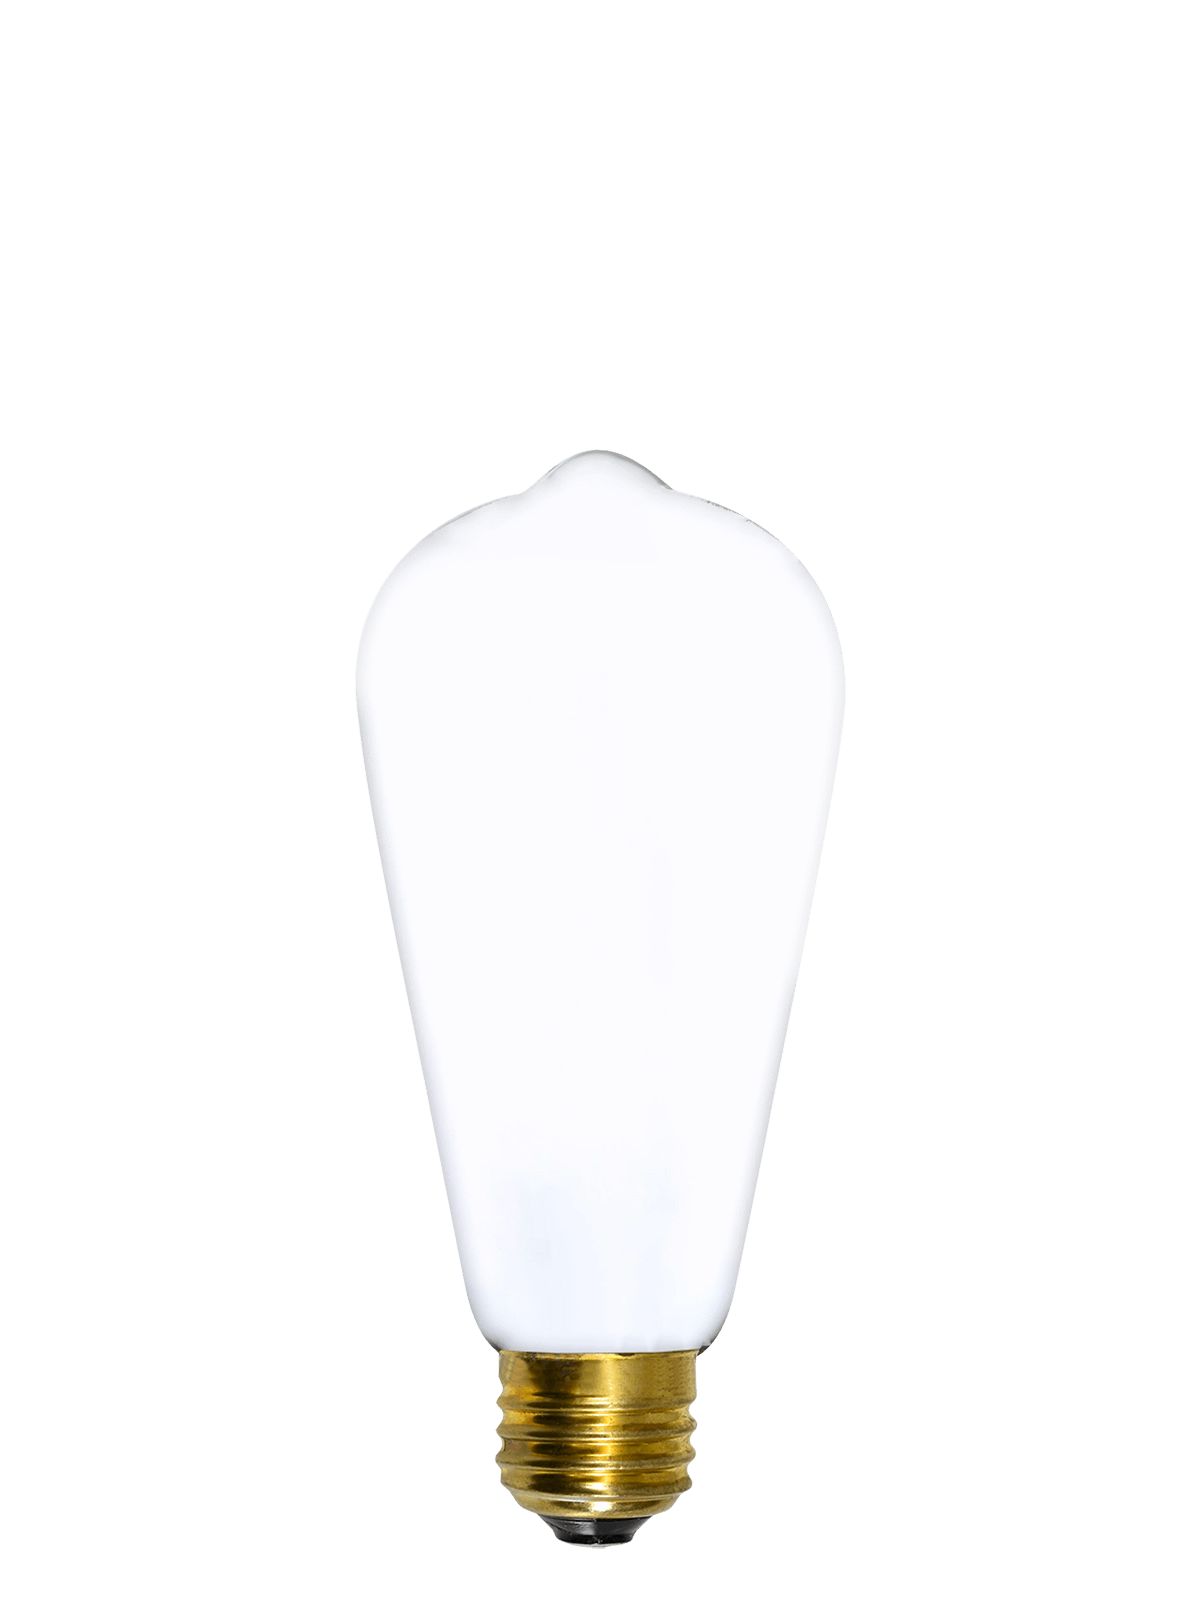 Bulb: LED - White Edison Hangout Lighting 